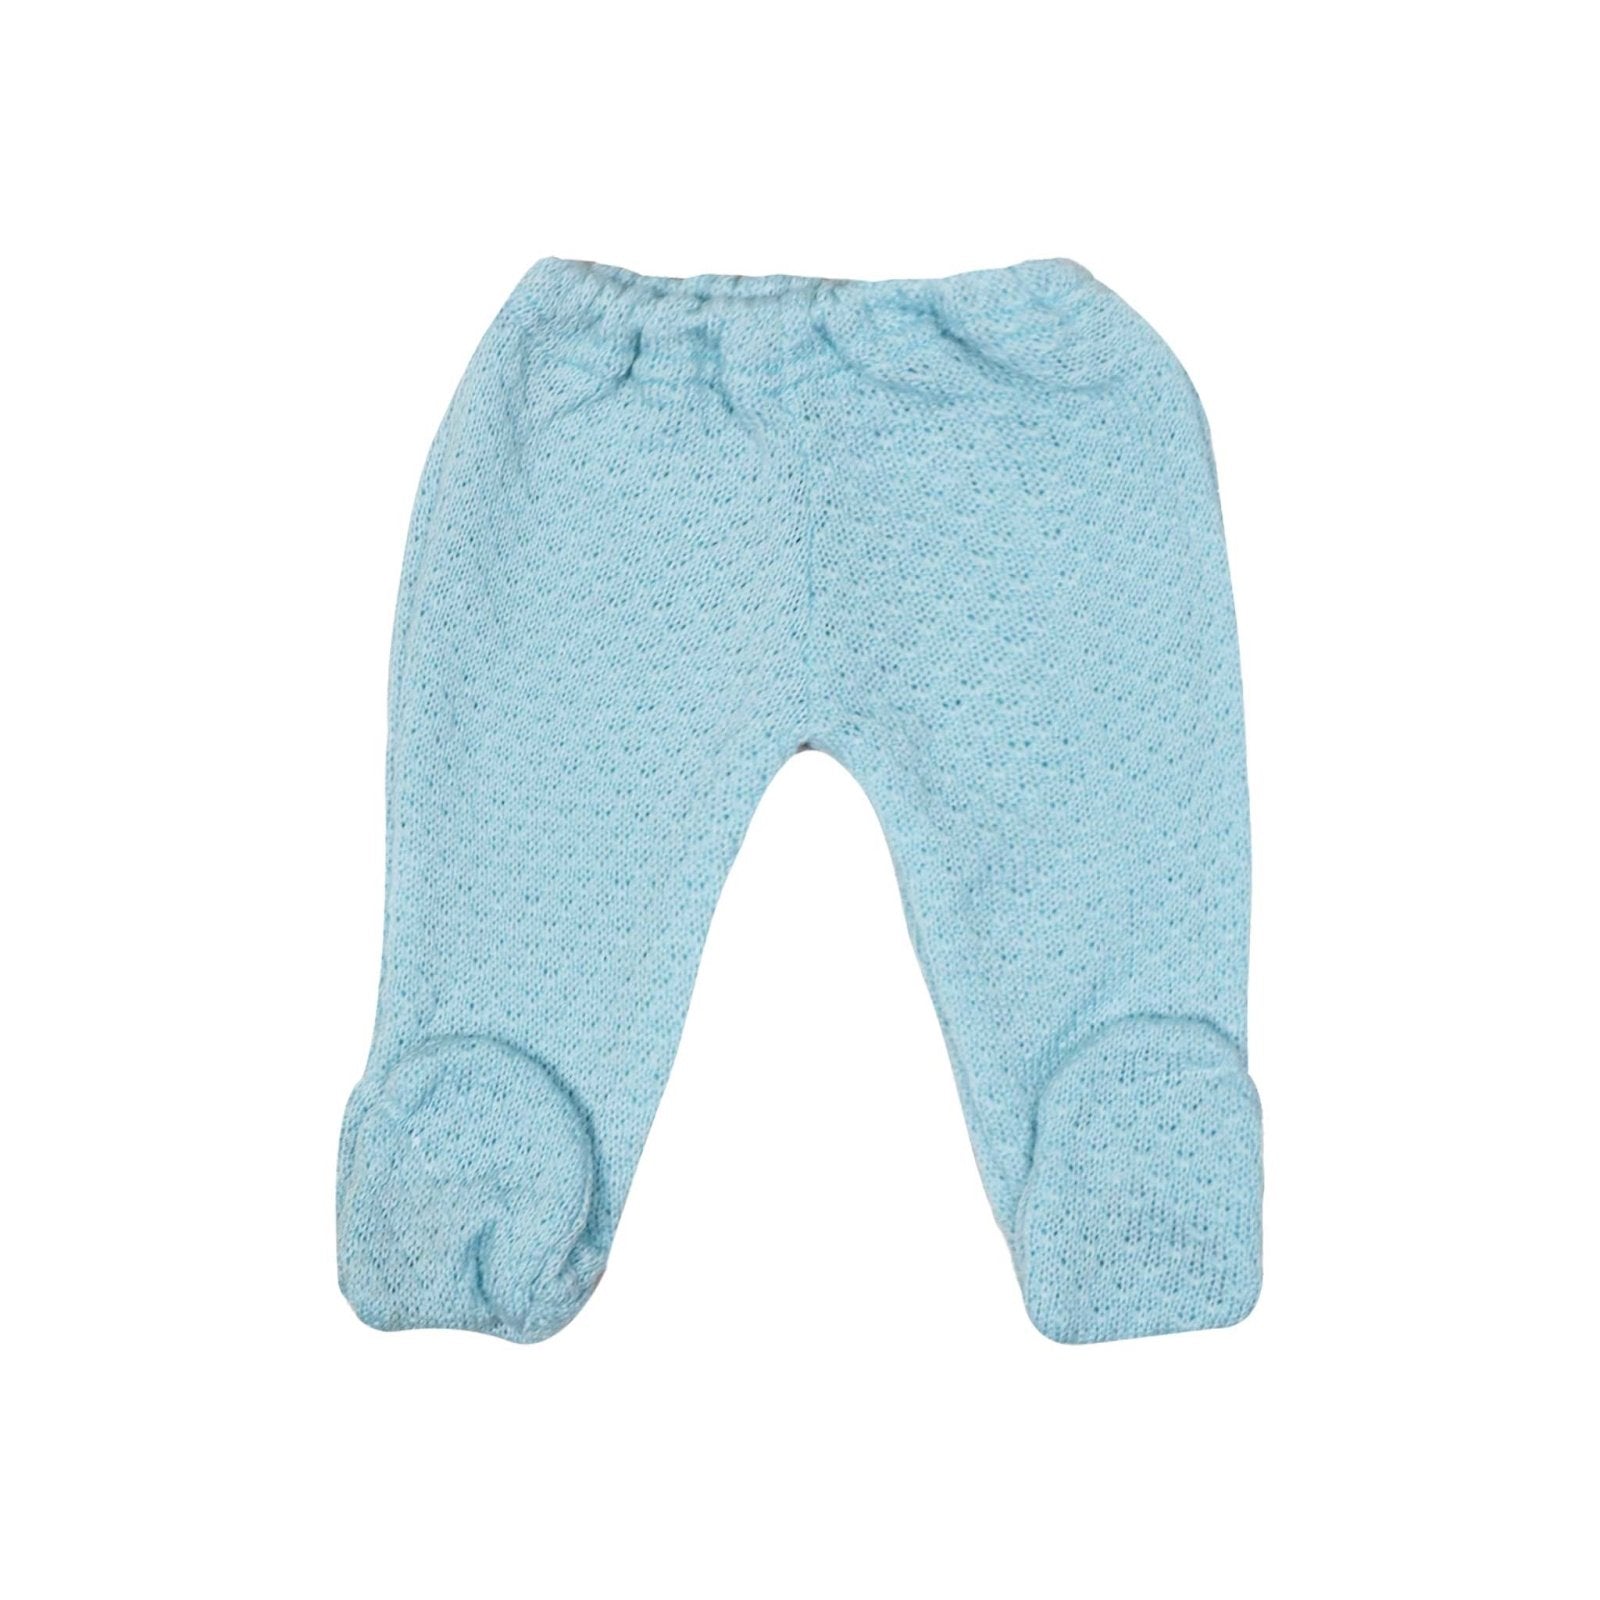 4 Pcs Woolen Gift Set Baby Blue Color by Little Darling